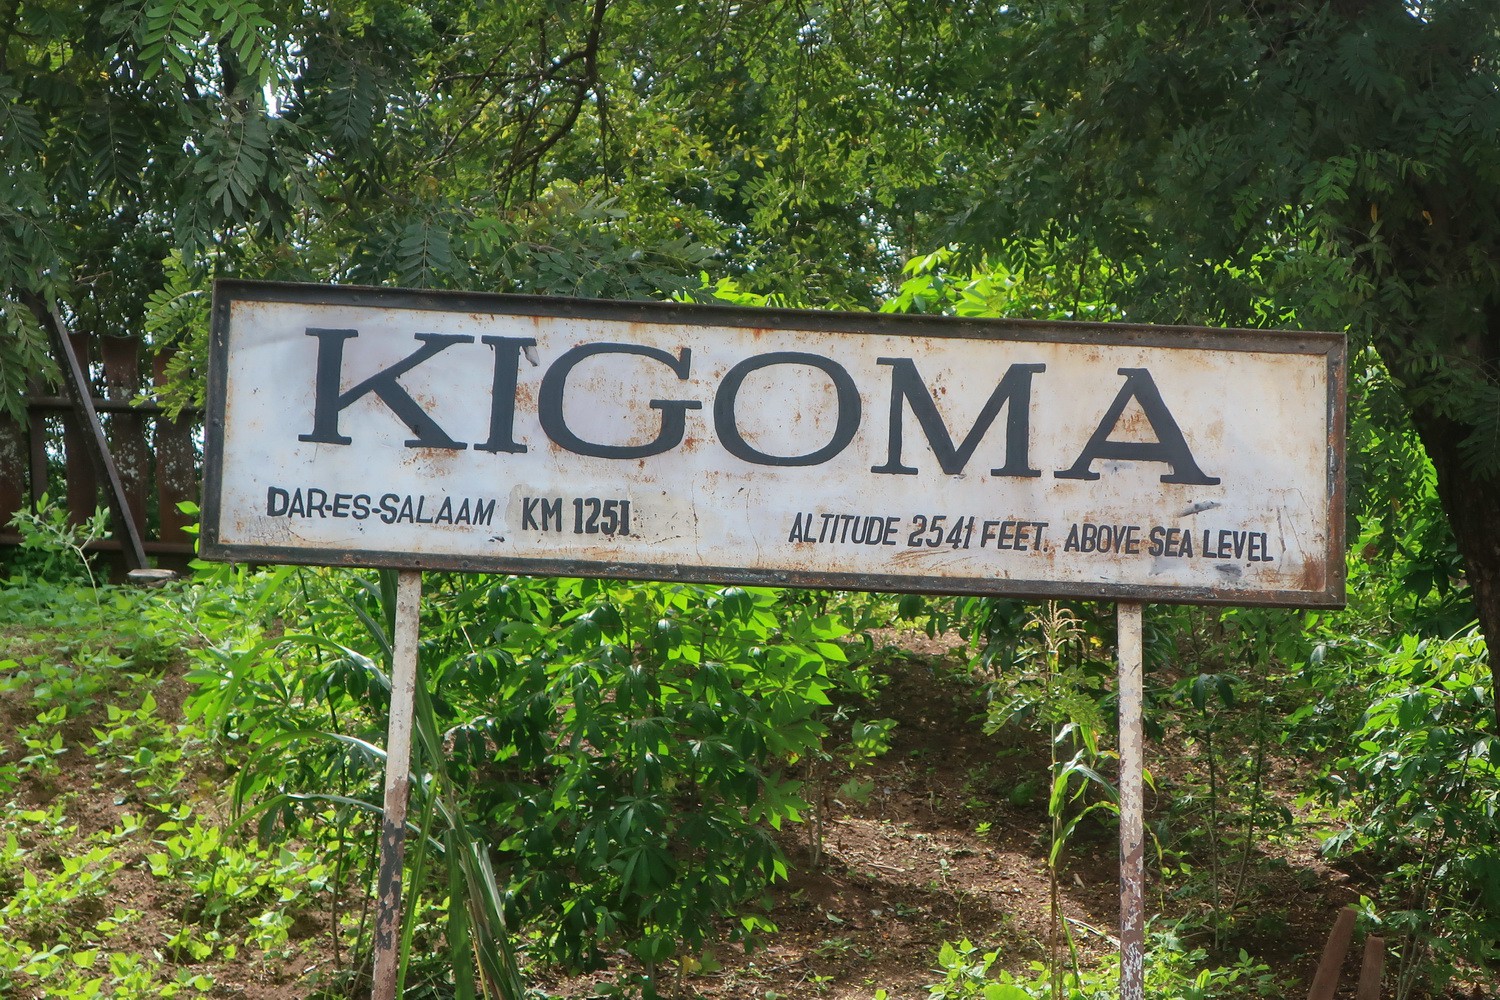 Finally arriving in Kigoma